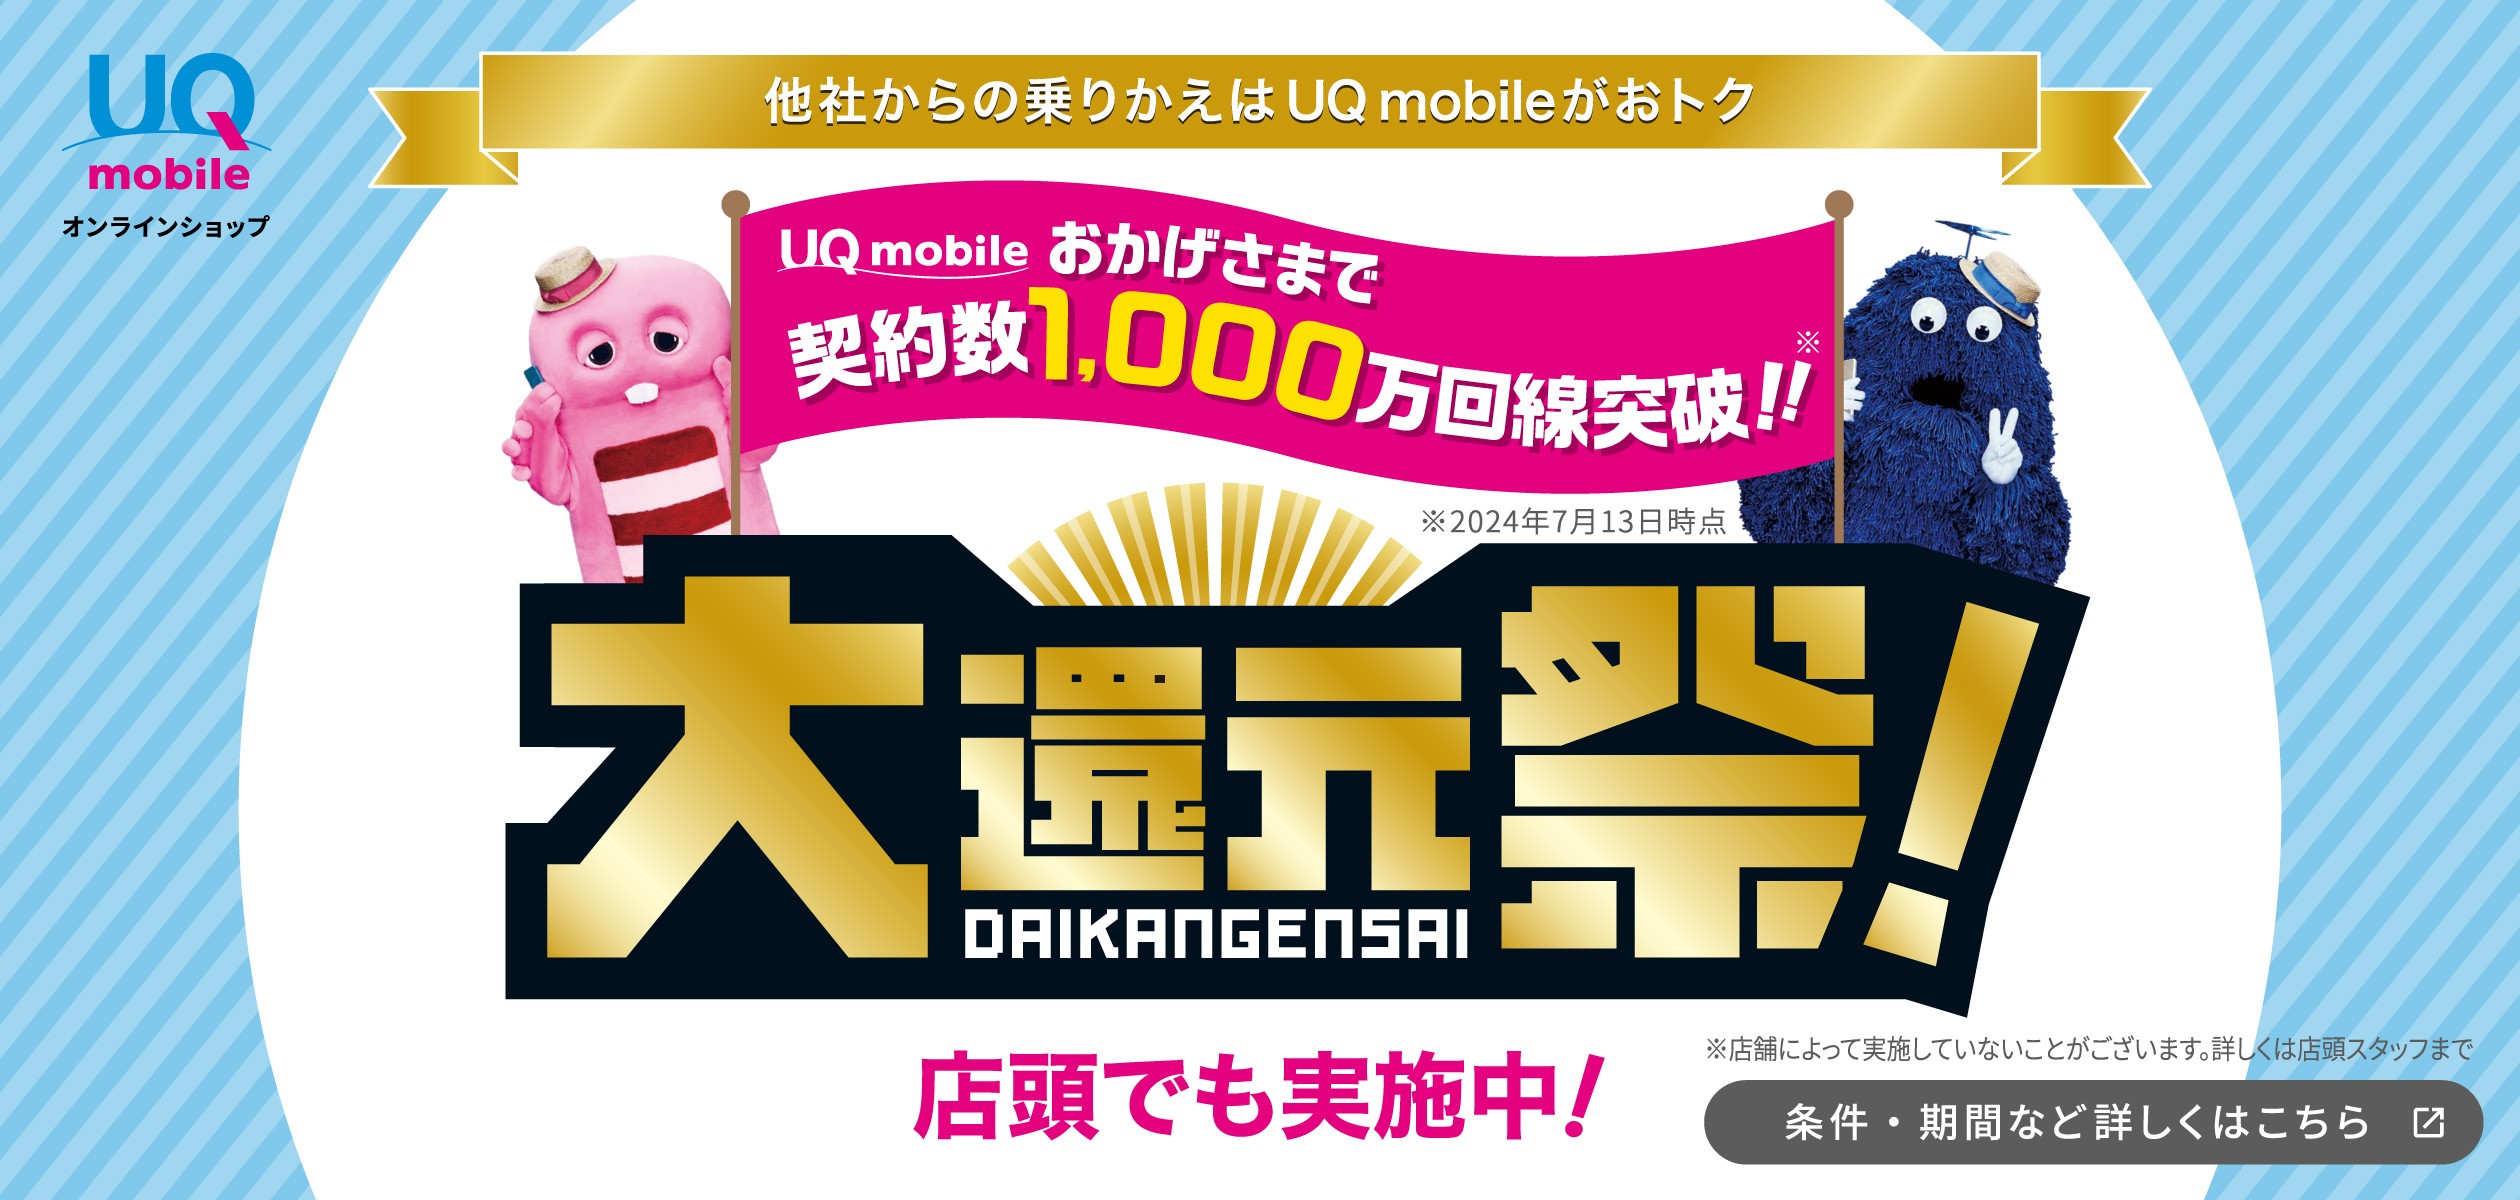 UQ mobile大還元祭の詳細ページに遷移するバナー